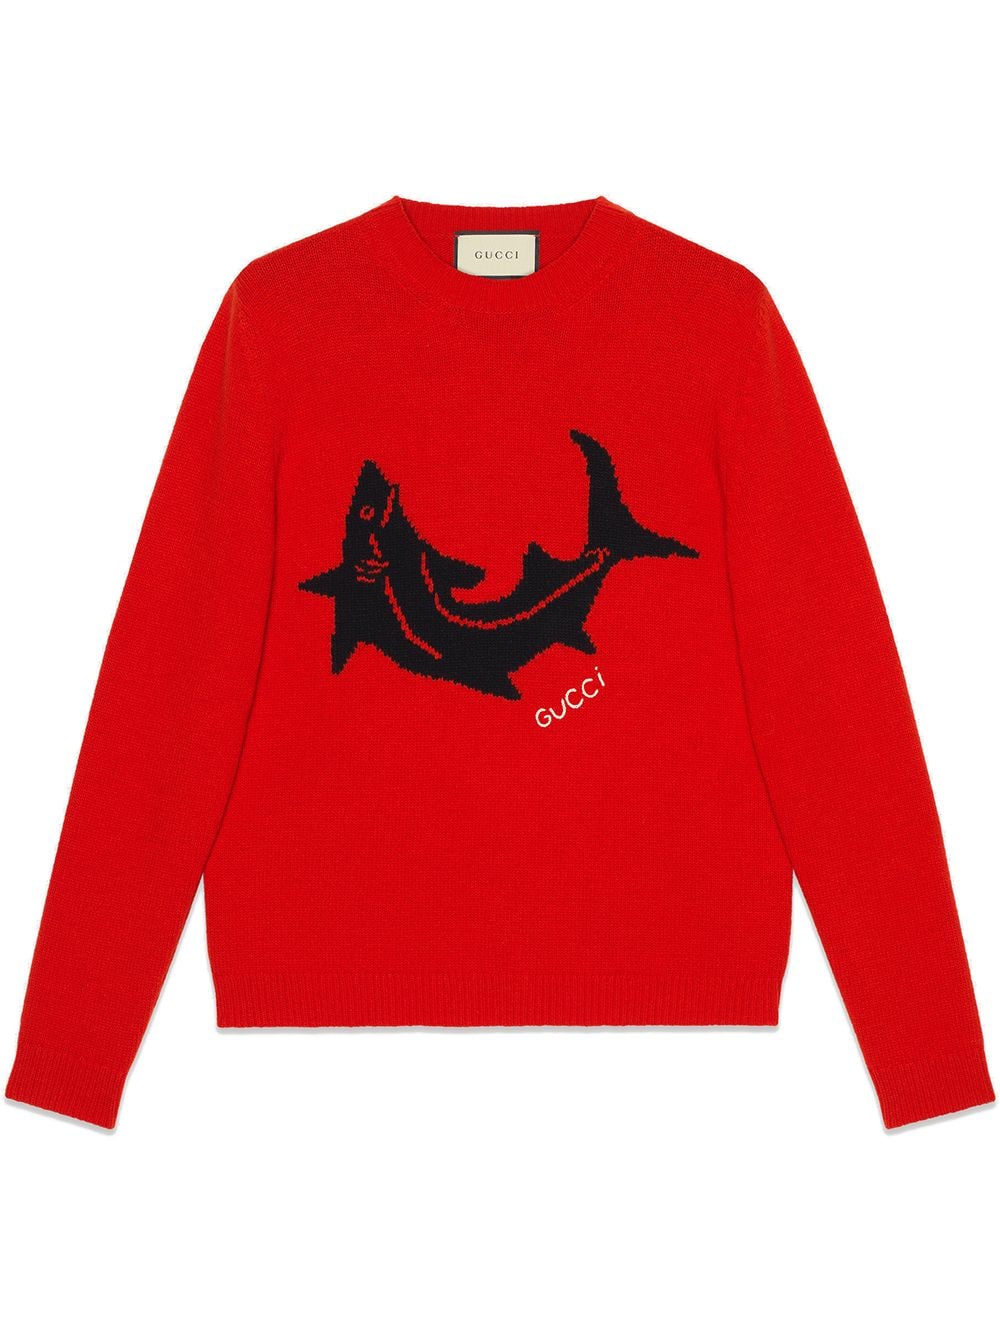 фото Gucci свитер с изображением акулы